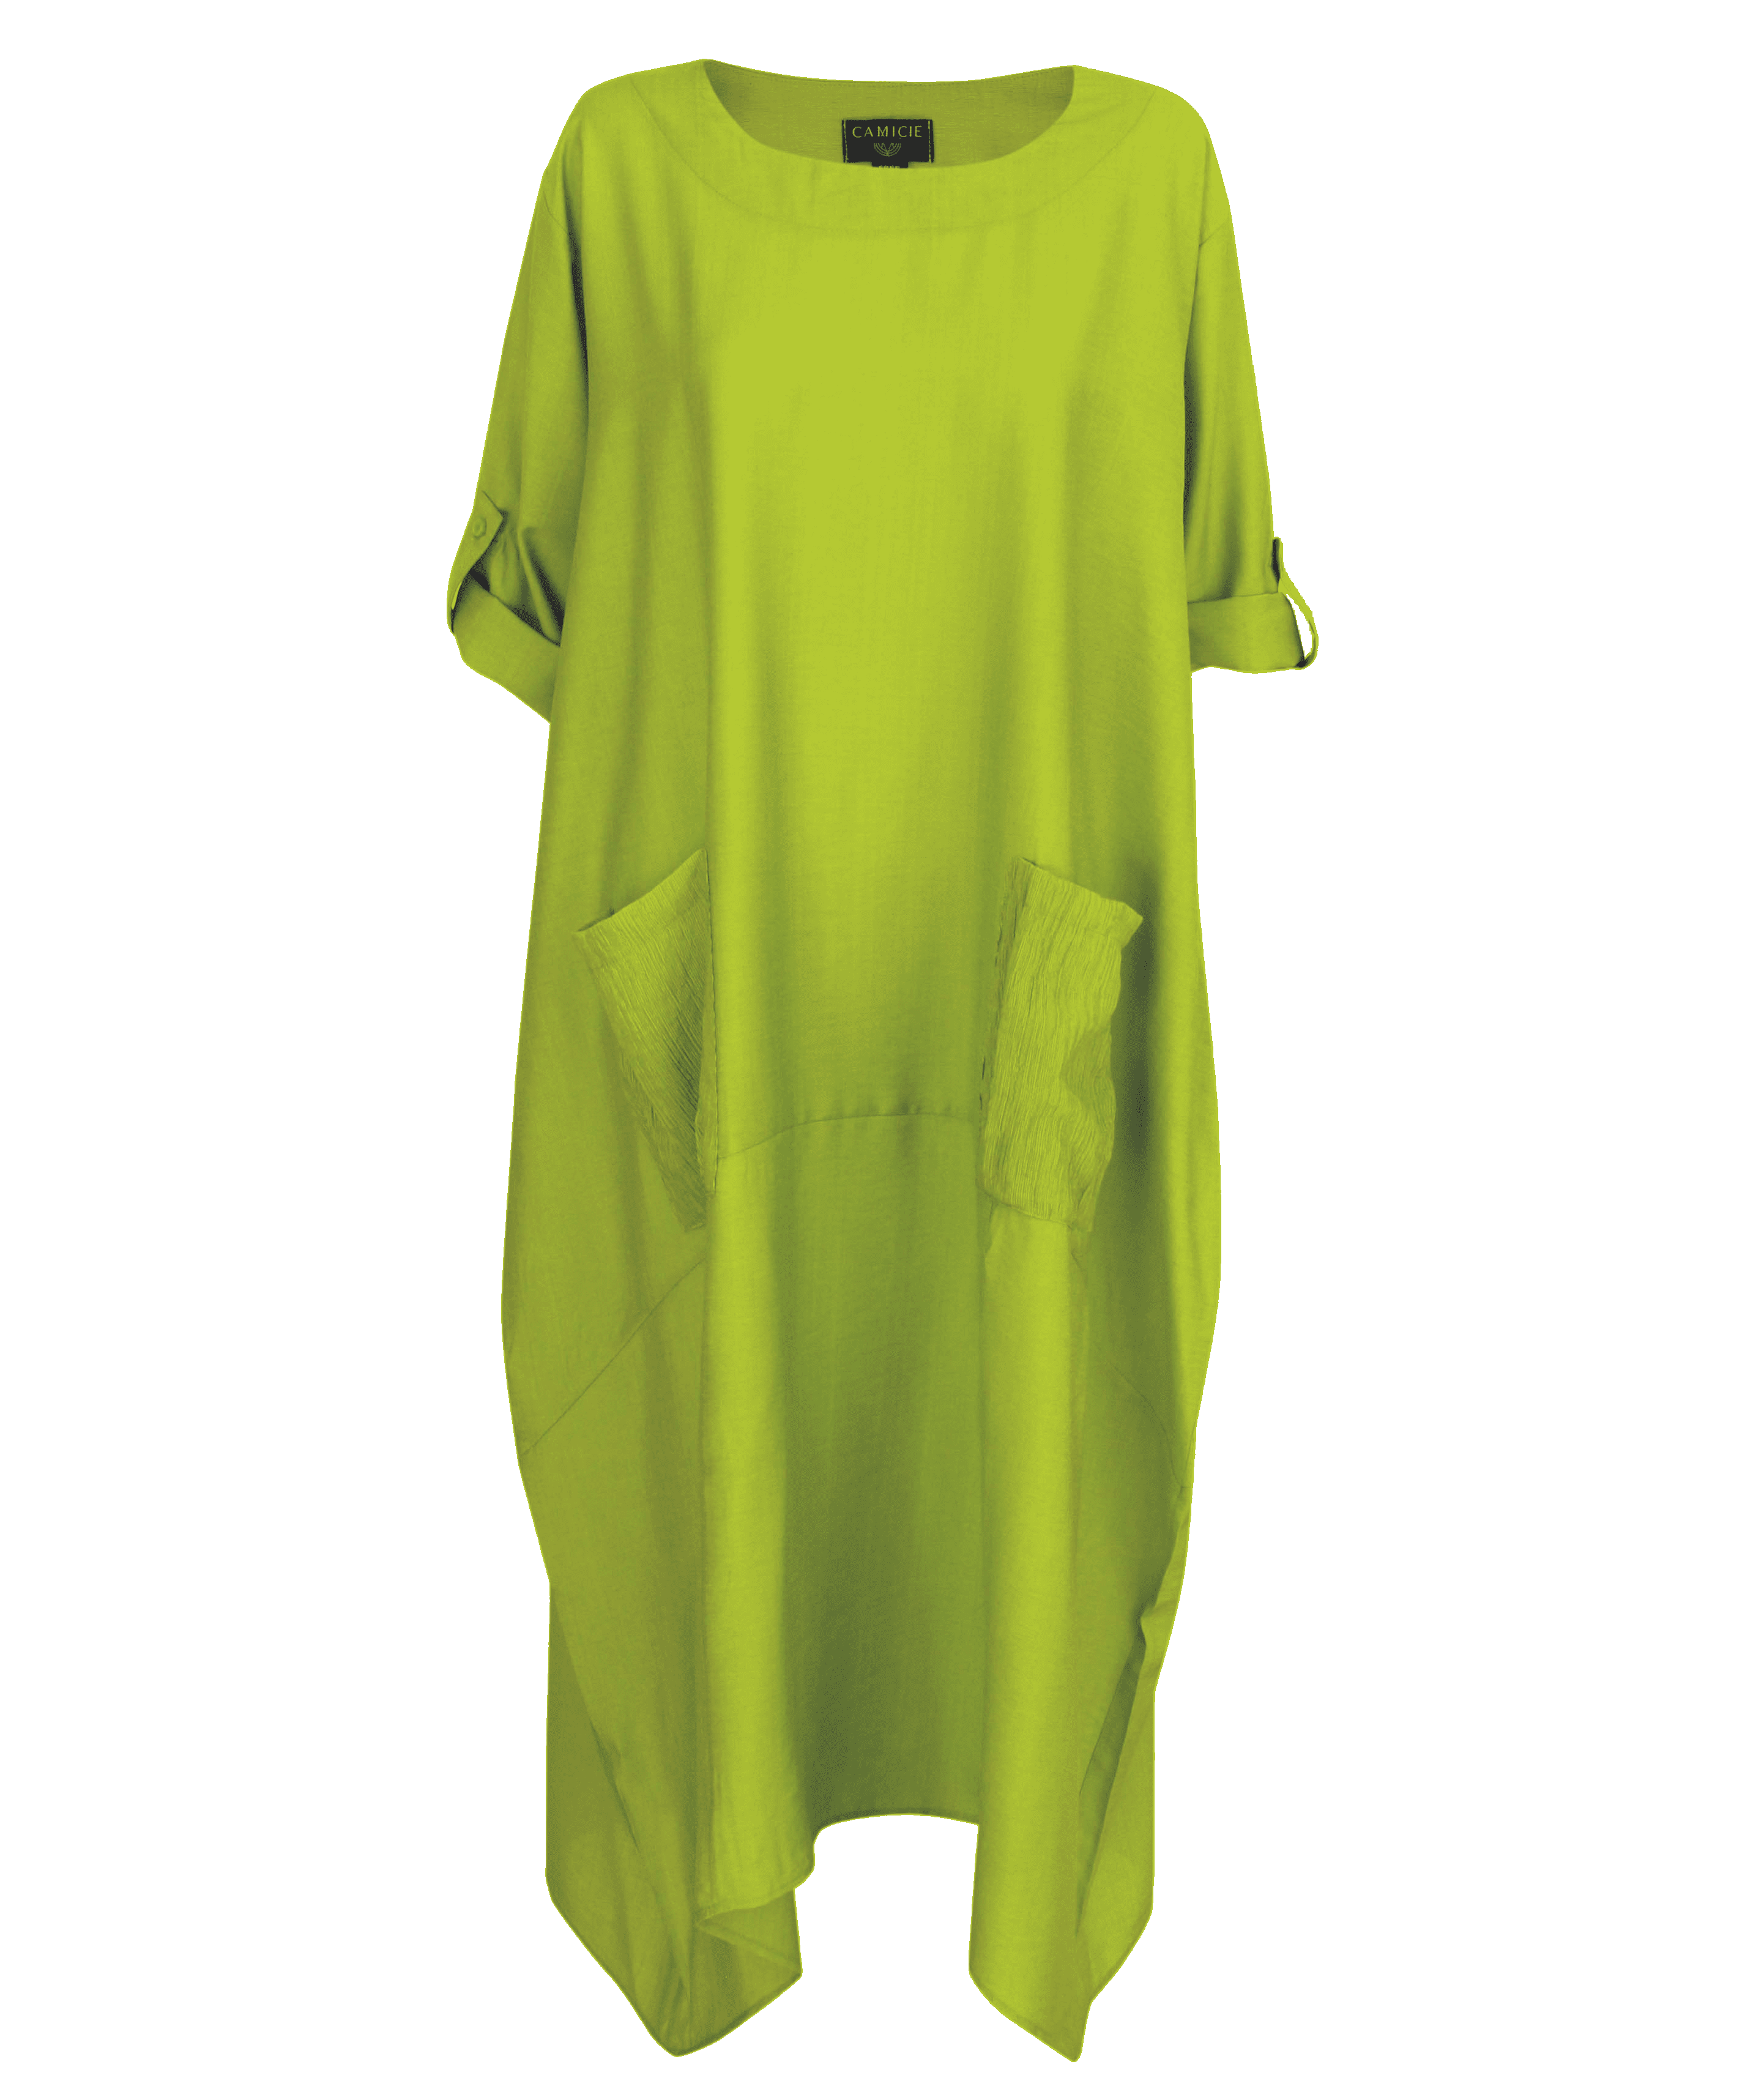 Lime Green Dress